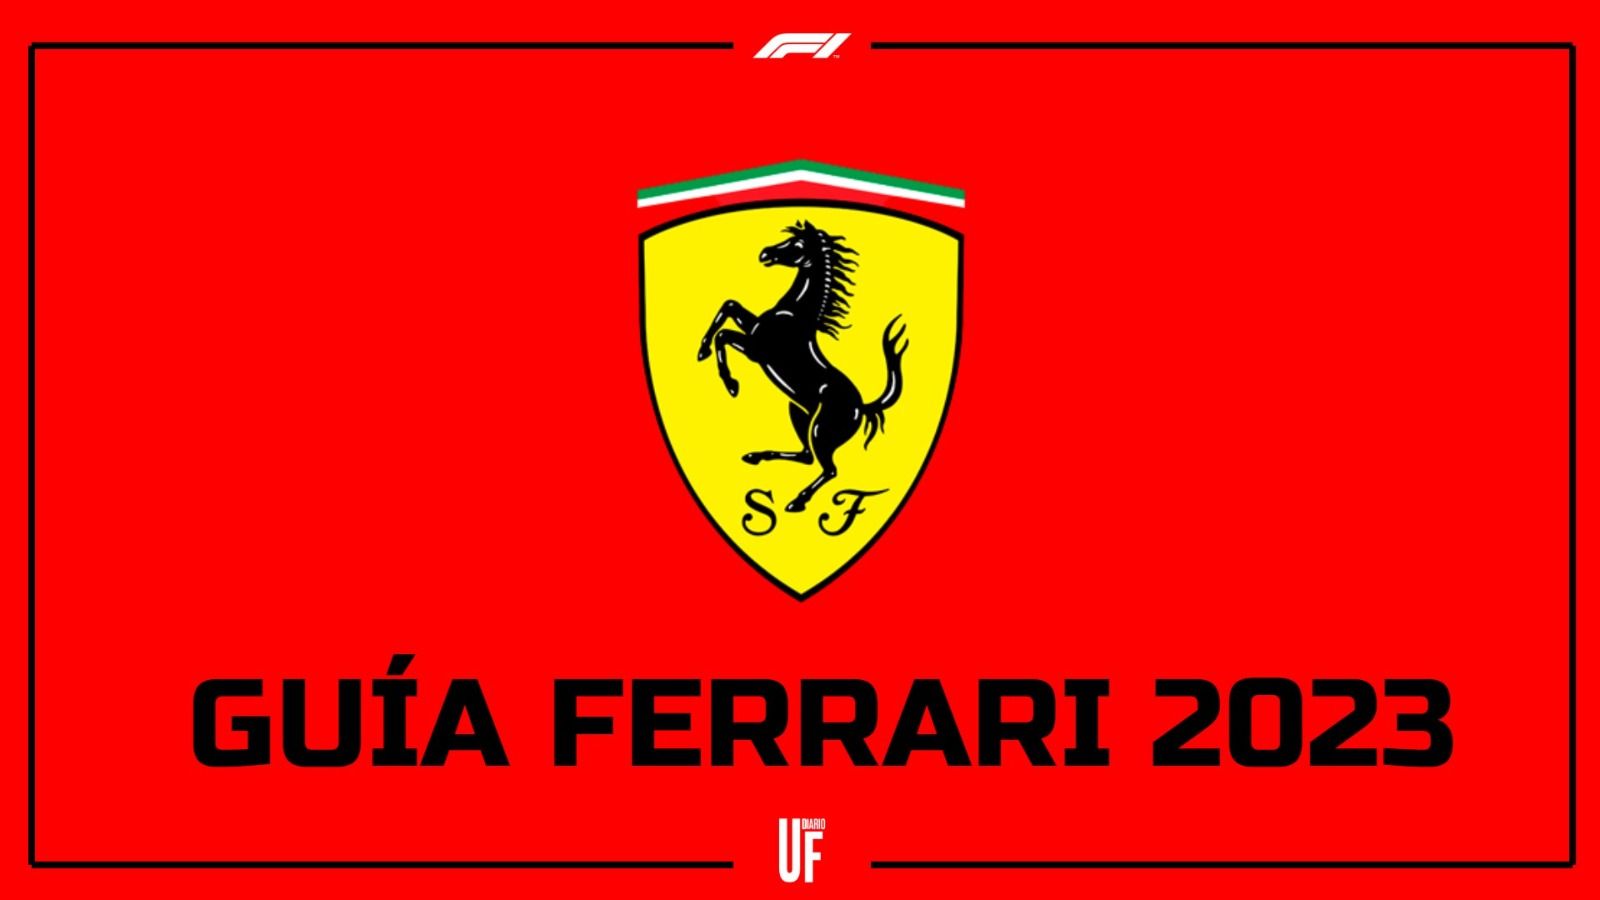 Guía Ferrari 2023: ¿El asalto al trono de Red Bull?